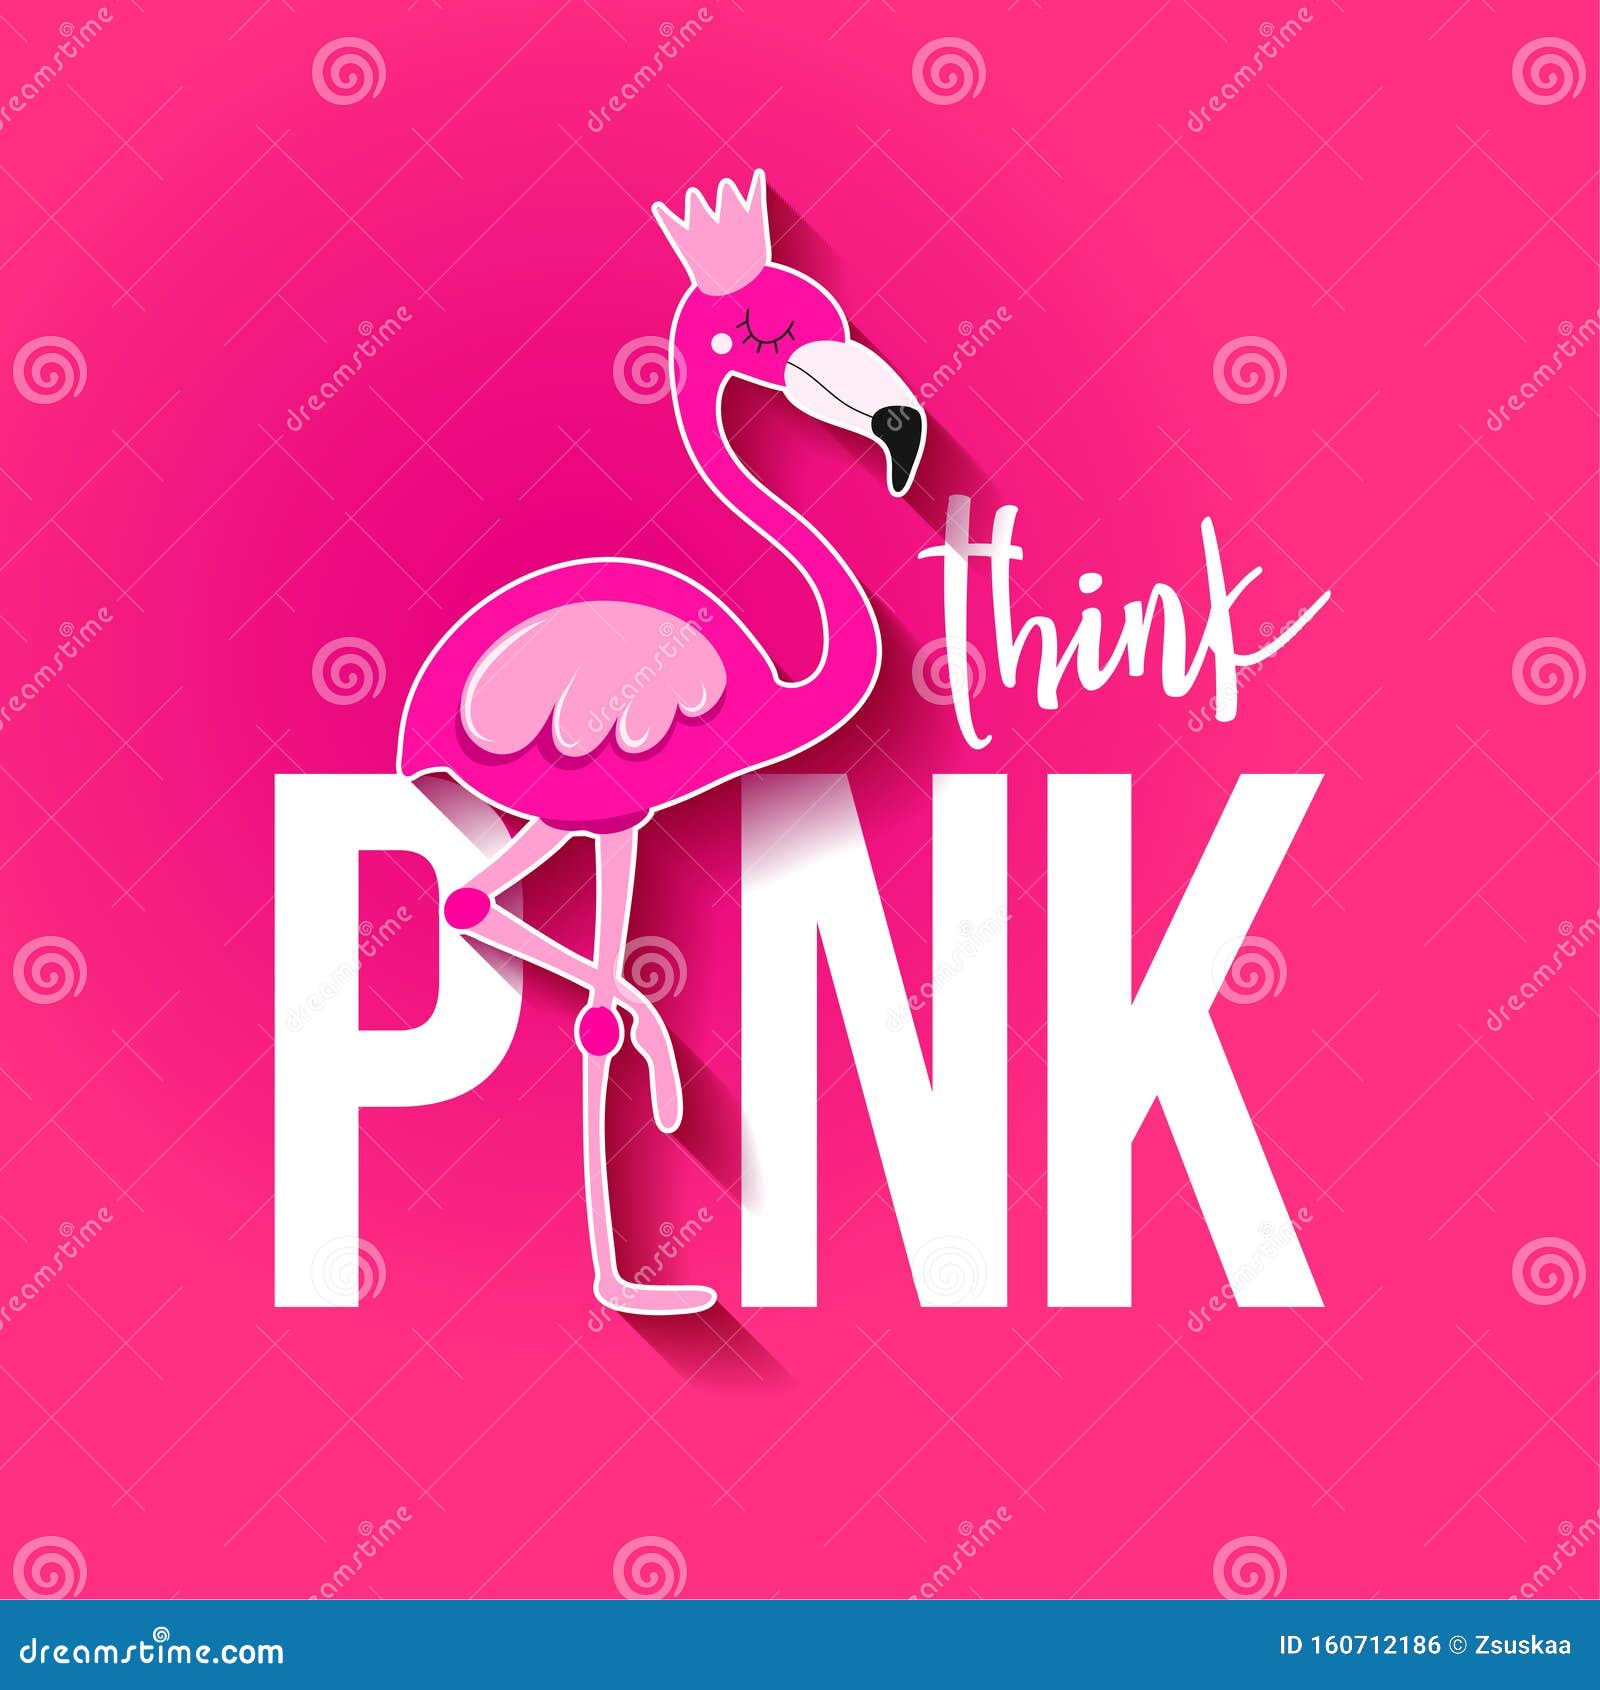 think pink flamingo - motivational quotes.